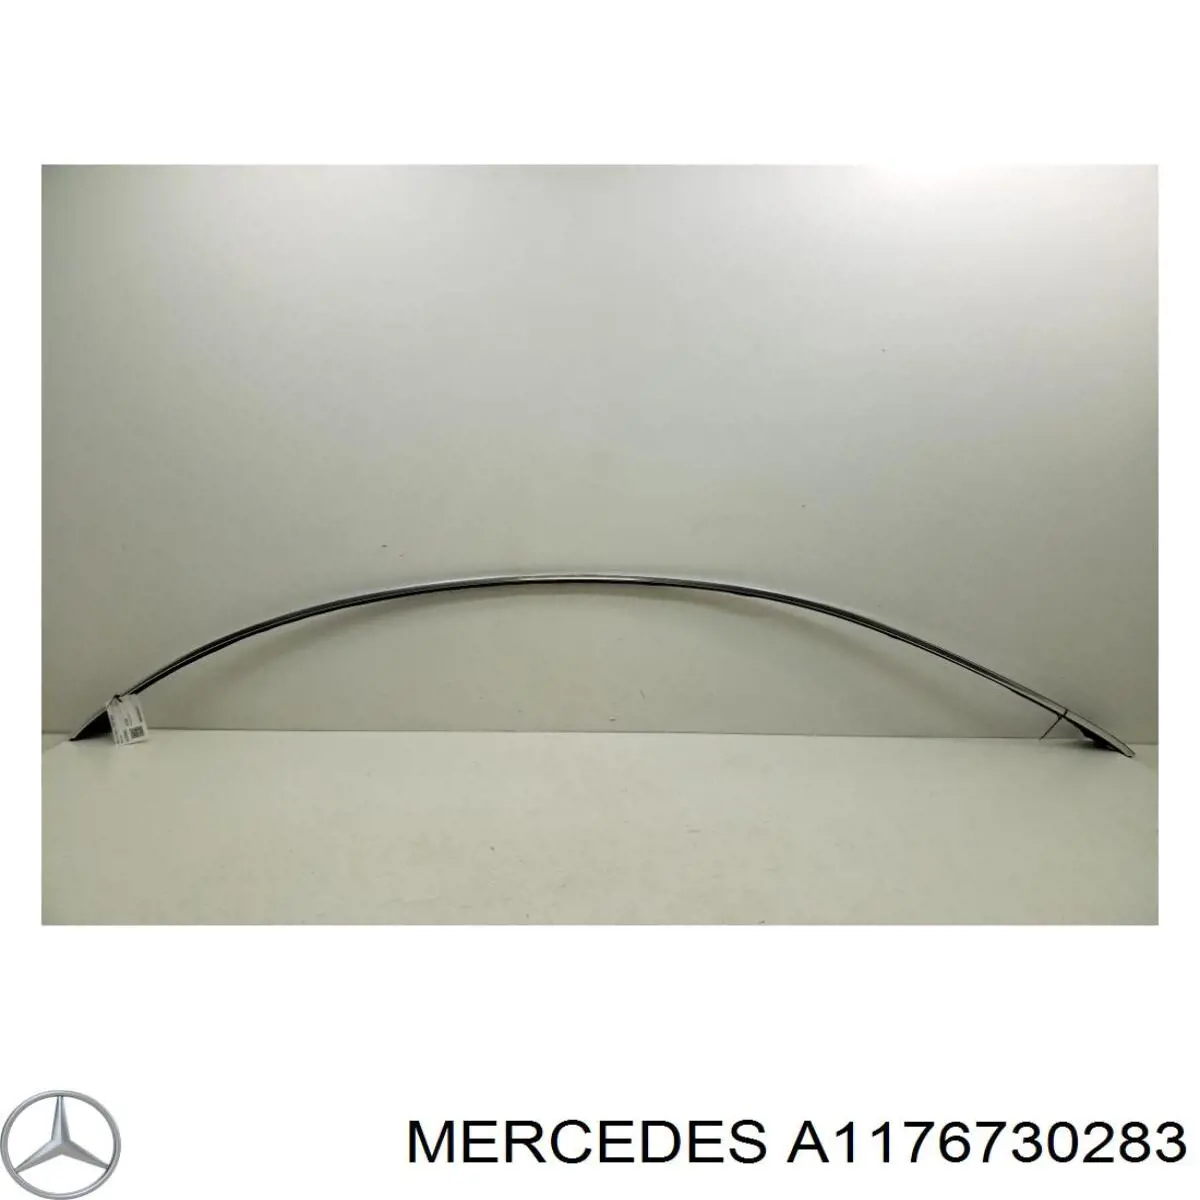 A1176730283 Mercedes